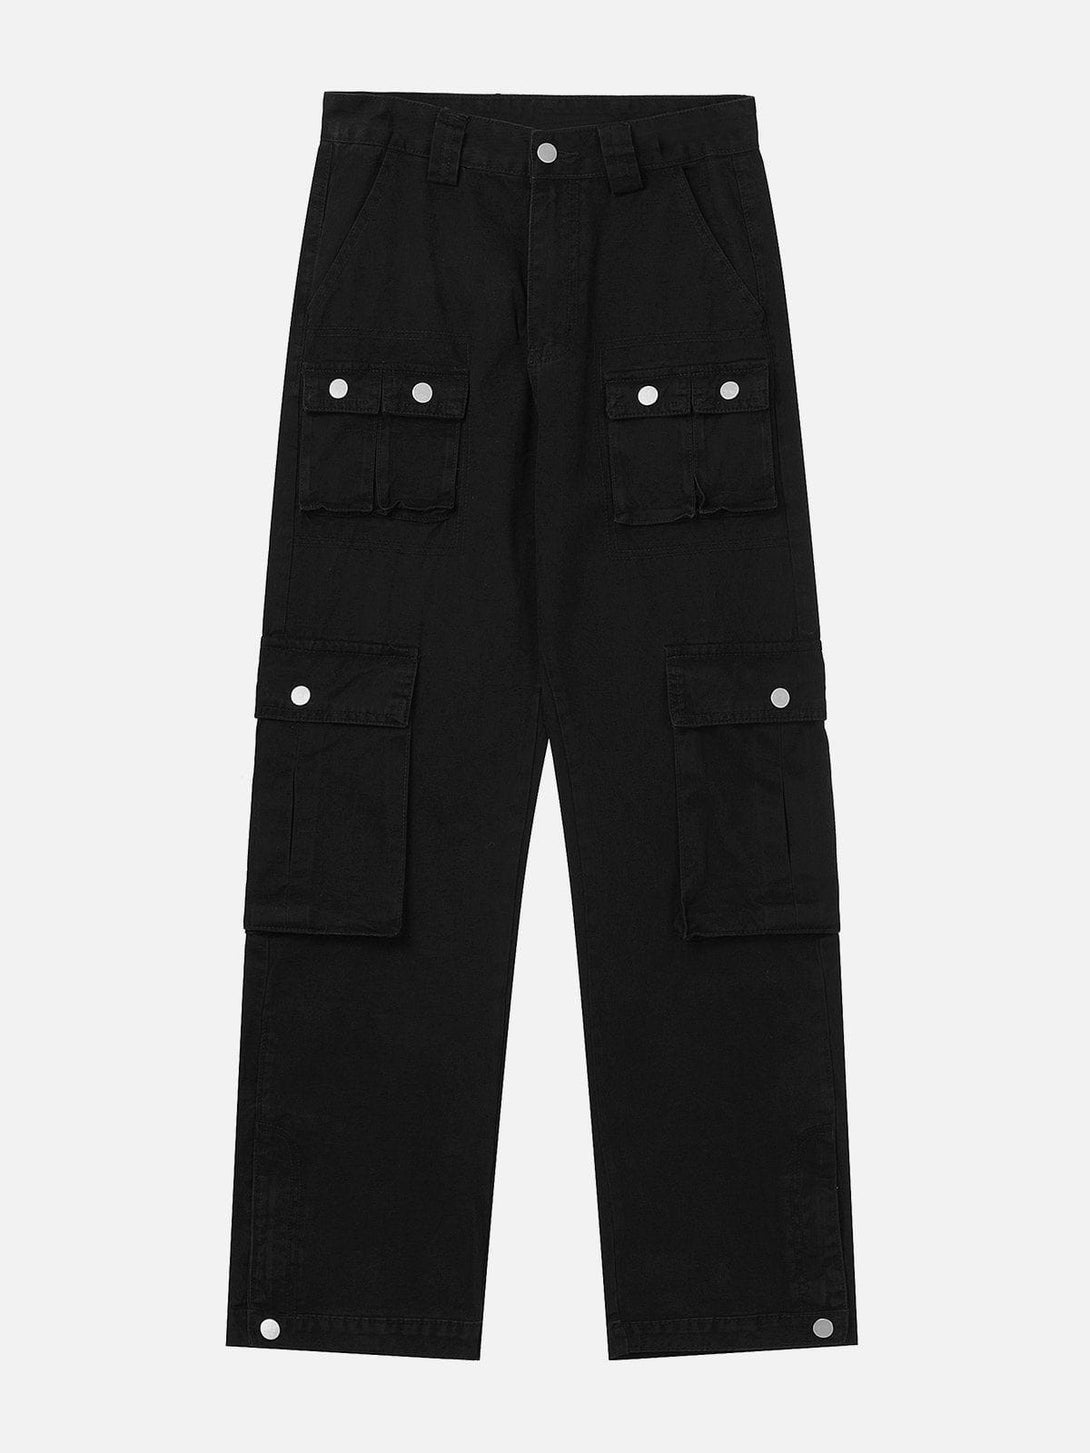 Levefly - Multi Pocket Denim Cargo Pants - Streetwear Fashion - levefly.com